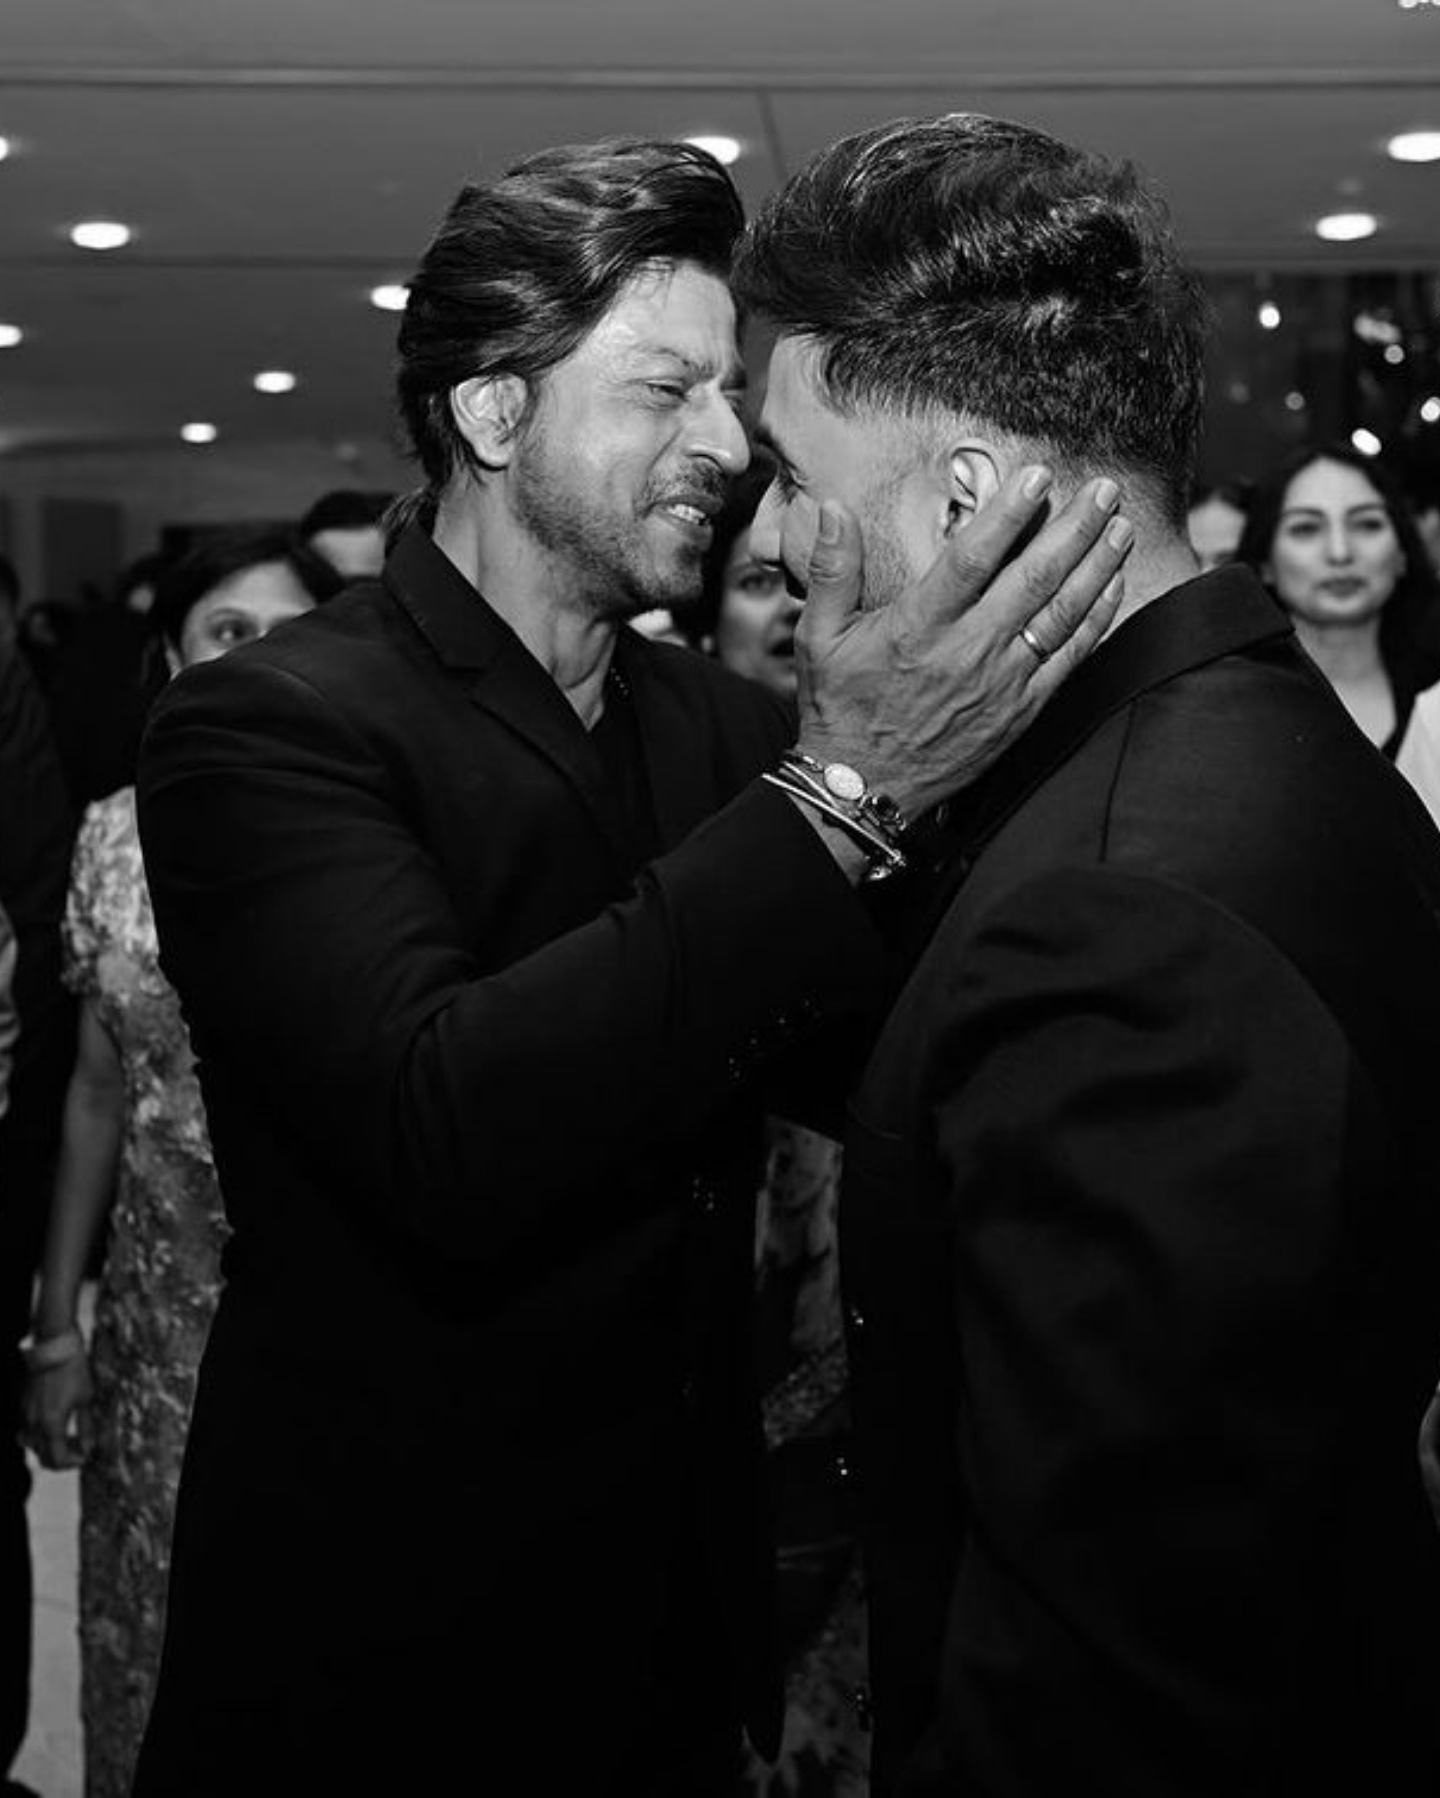 Shah Rukh Khan and Vir Das at The Archies screening